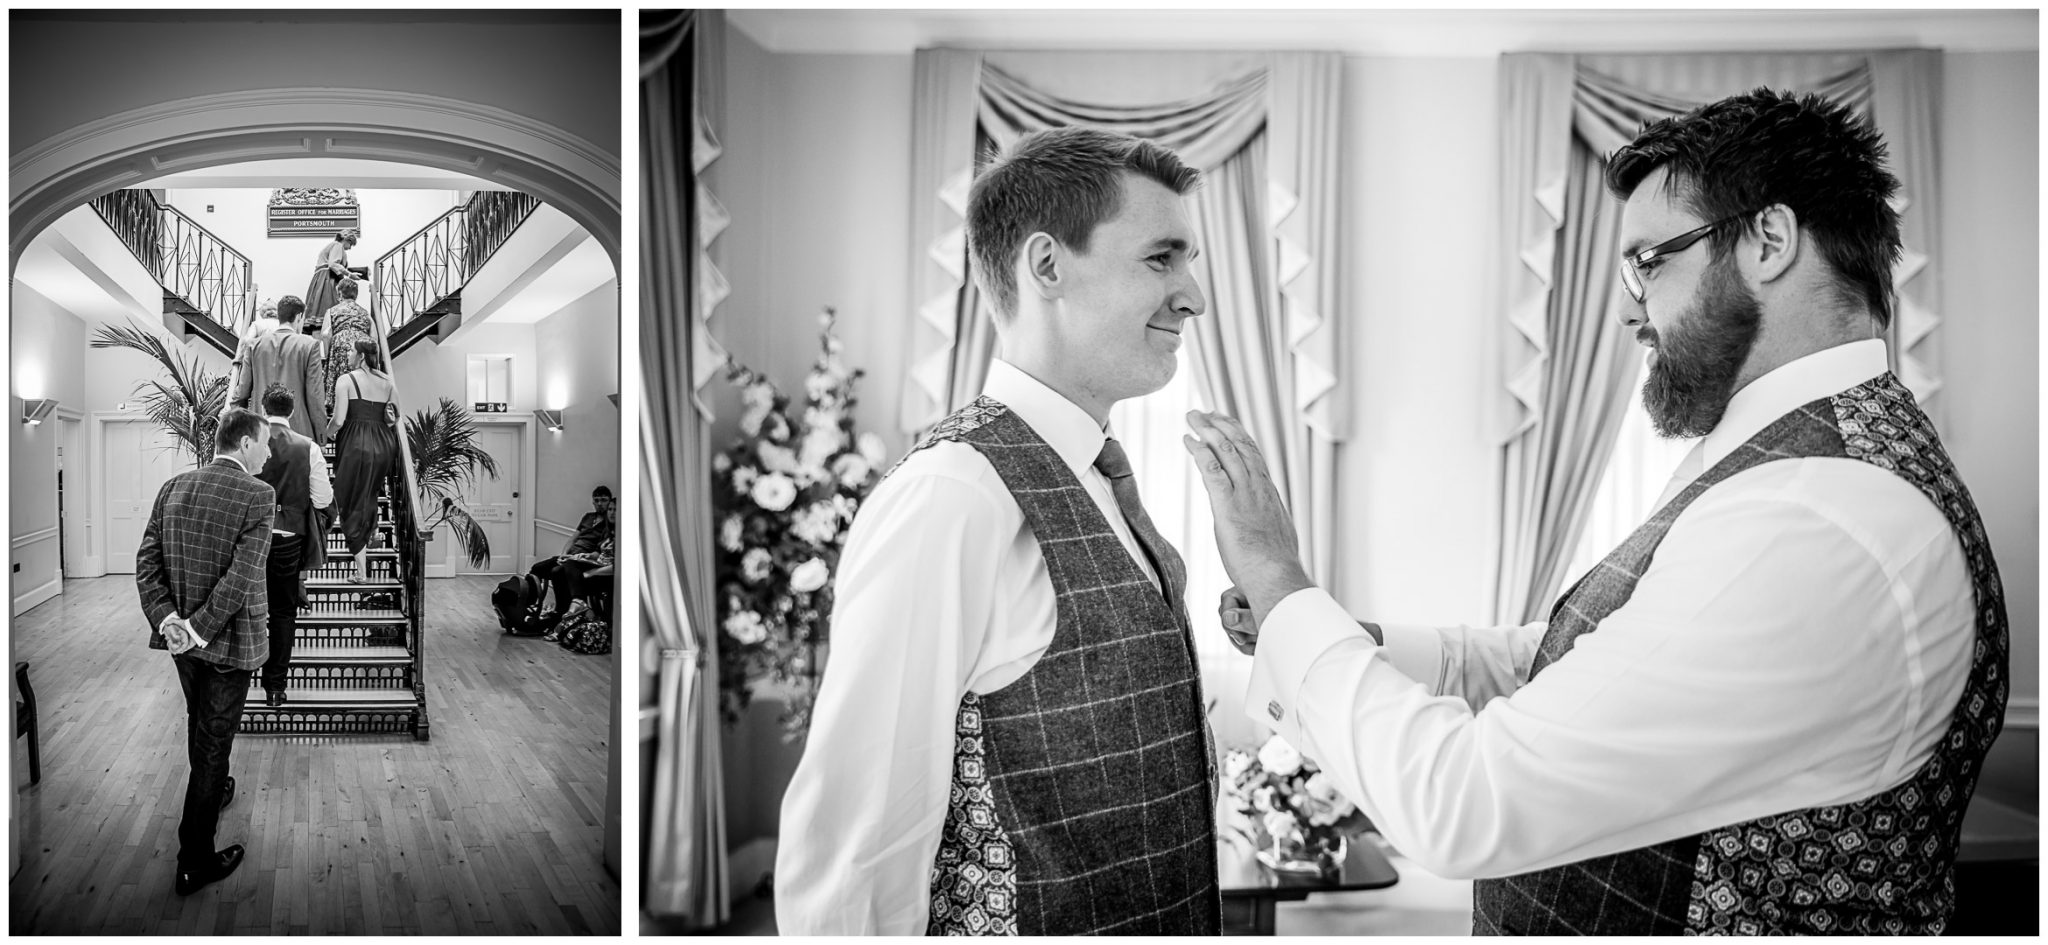 Portsmouth Registry Office wedding groom with best man